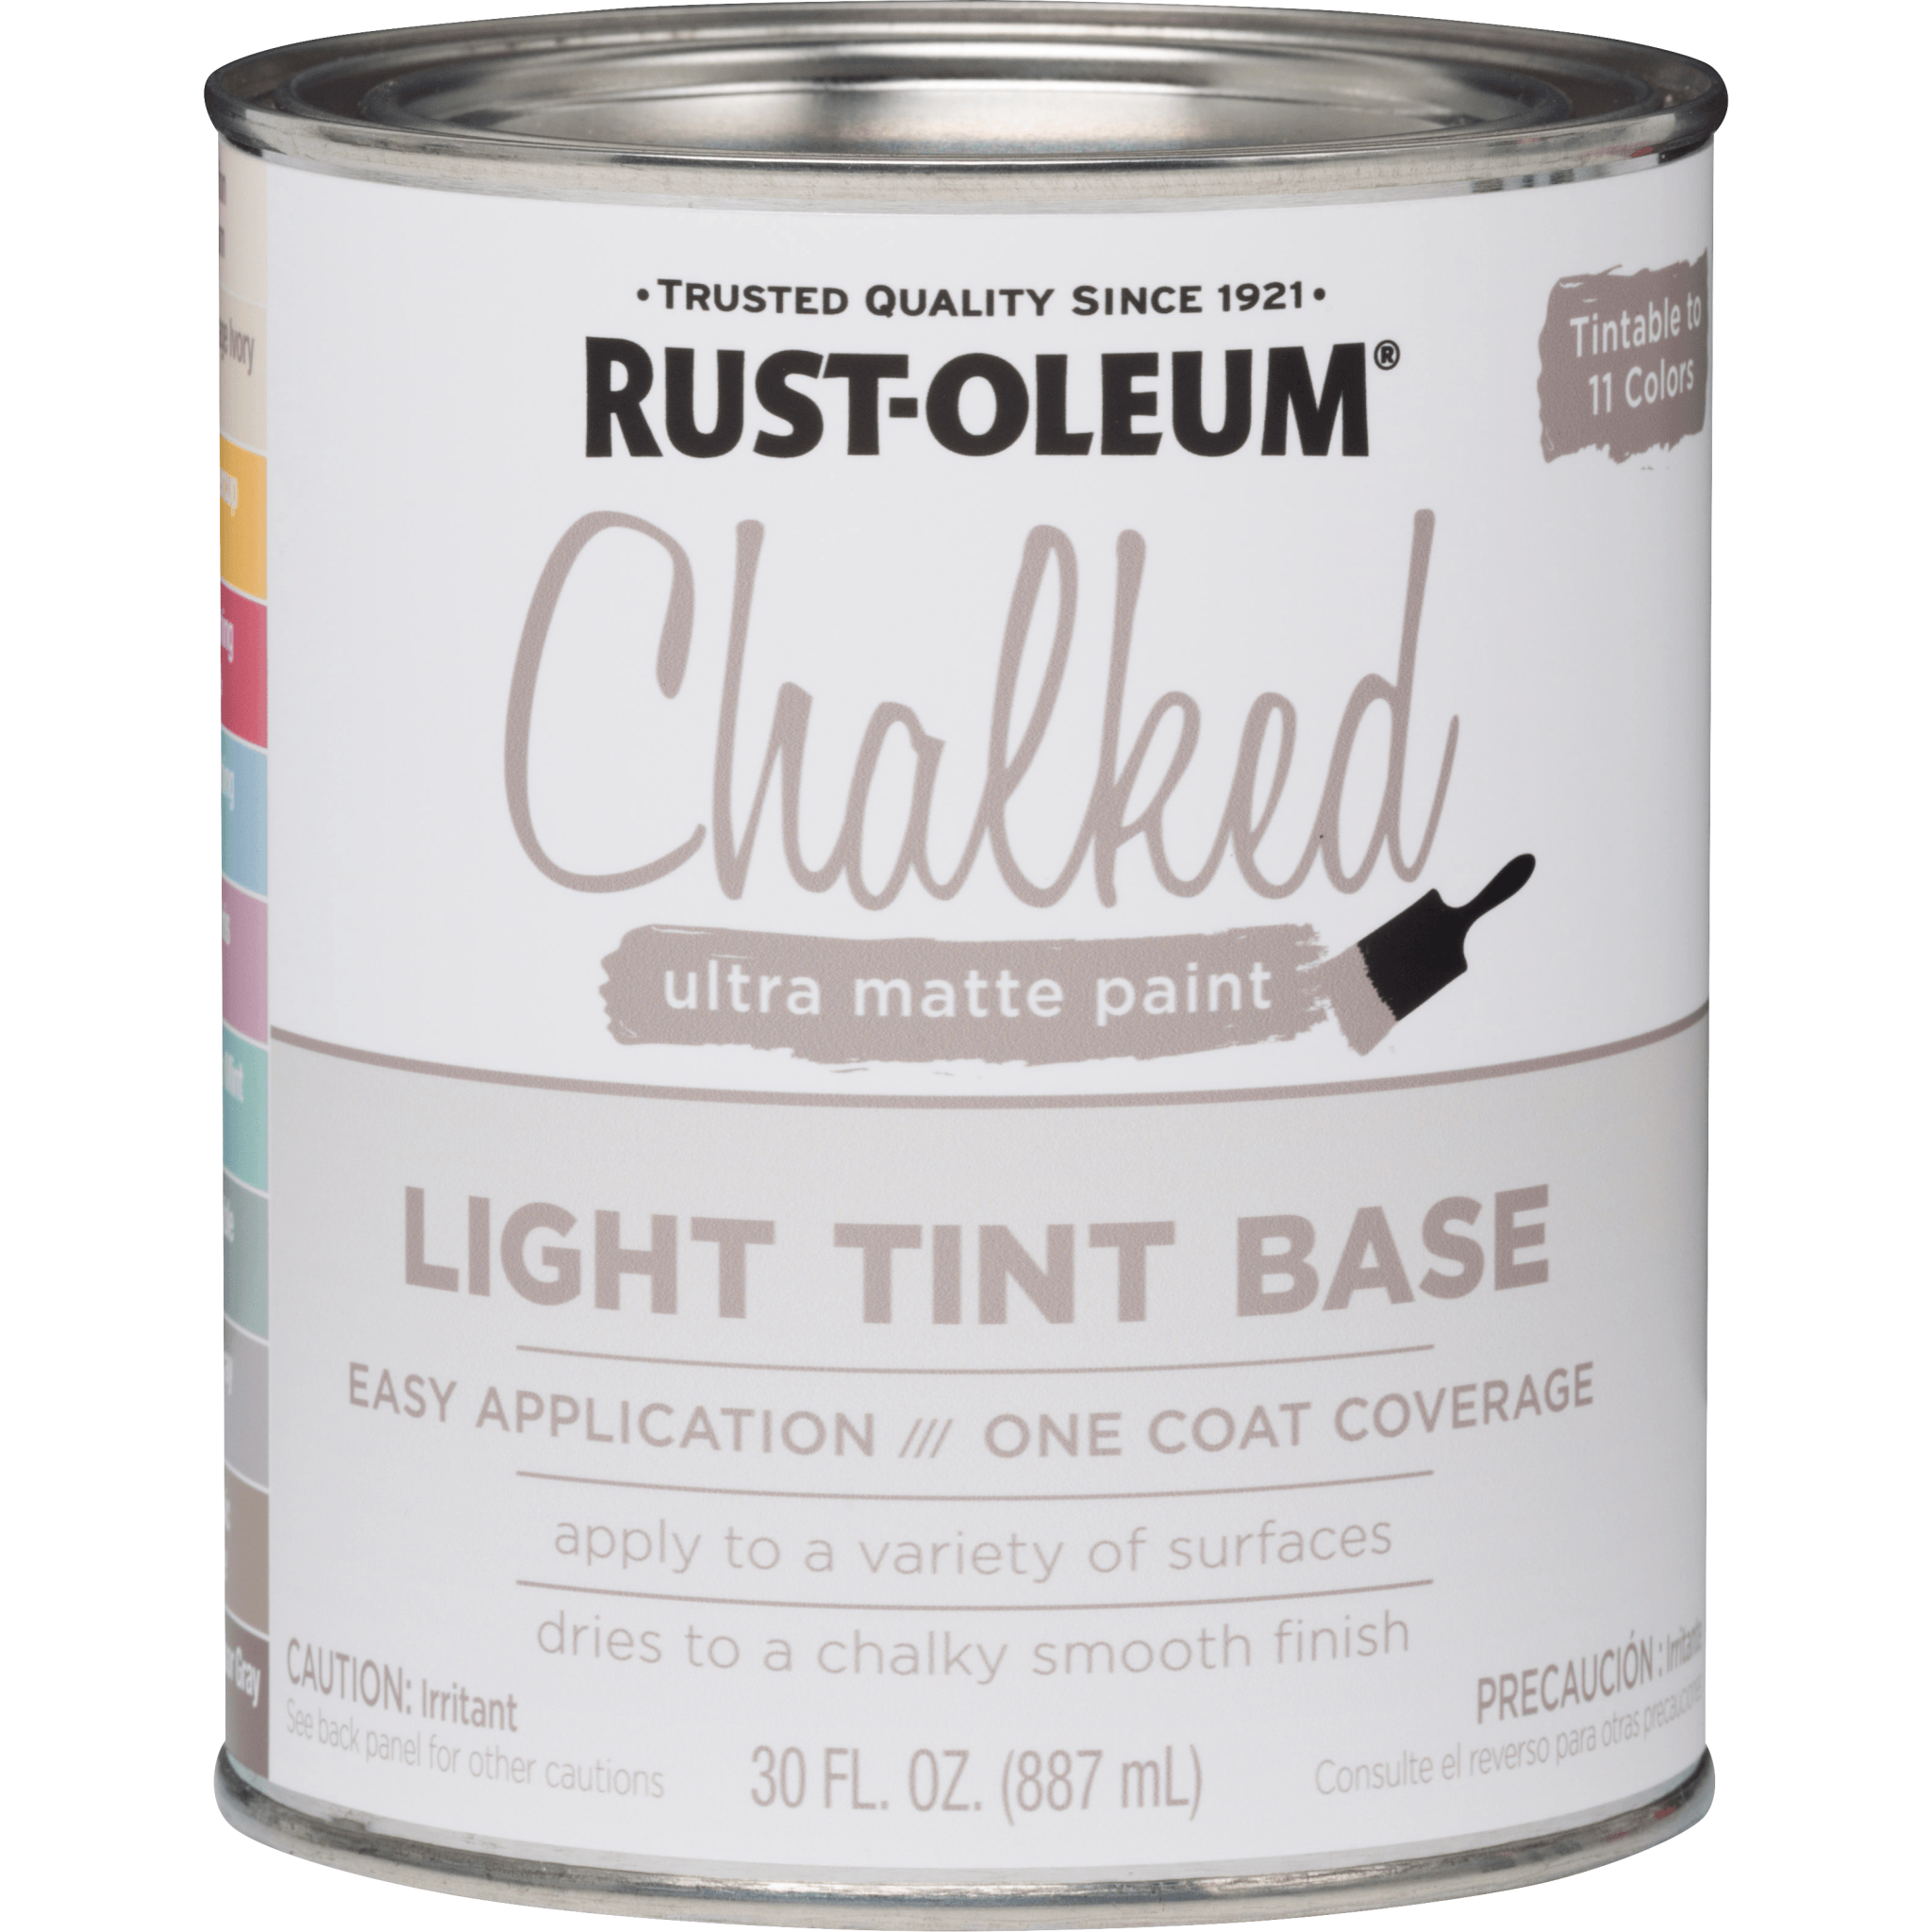 Rust-Oleum Chalked 30 fl. oz. Light Tint Base Ultra Matte Paint - innovationssa